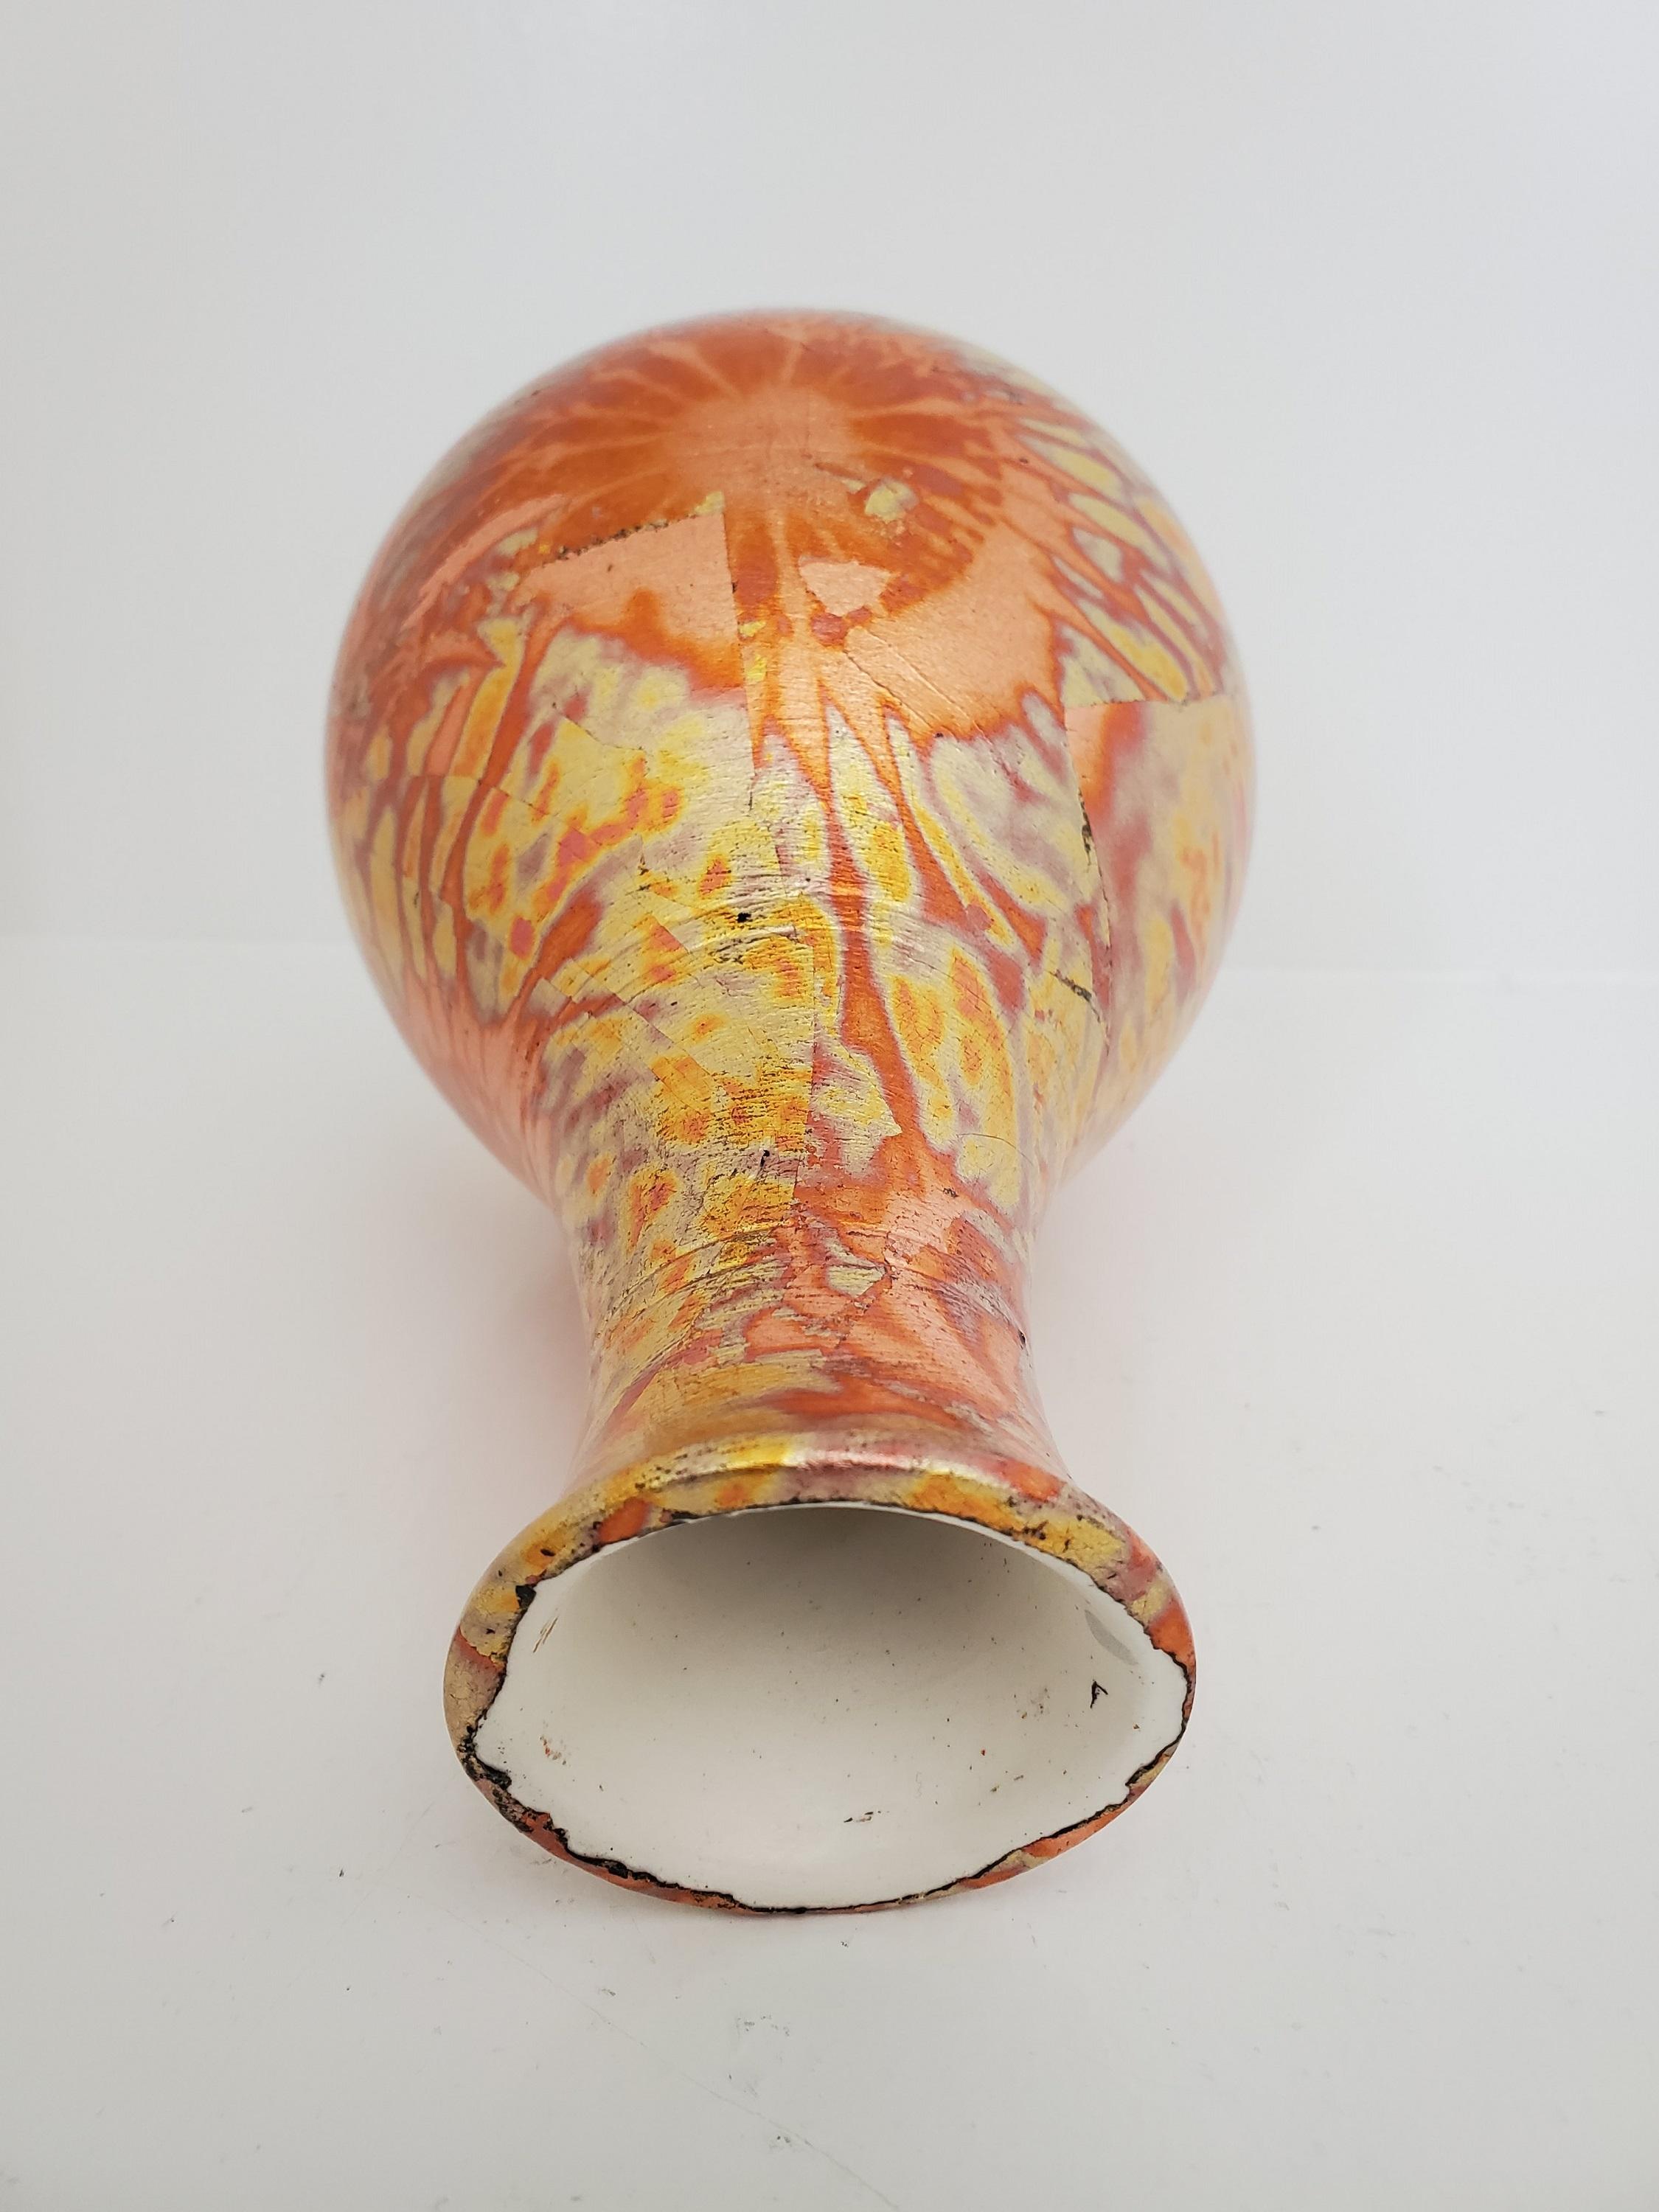 Turned Raku Pottery Vase from NW Raku Gallery For Sale